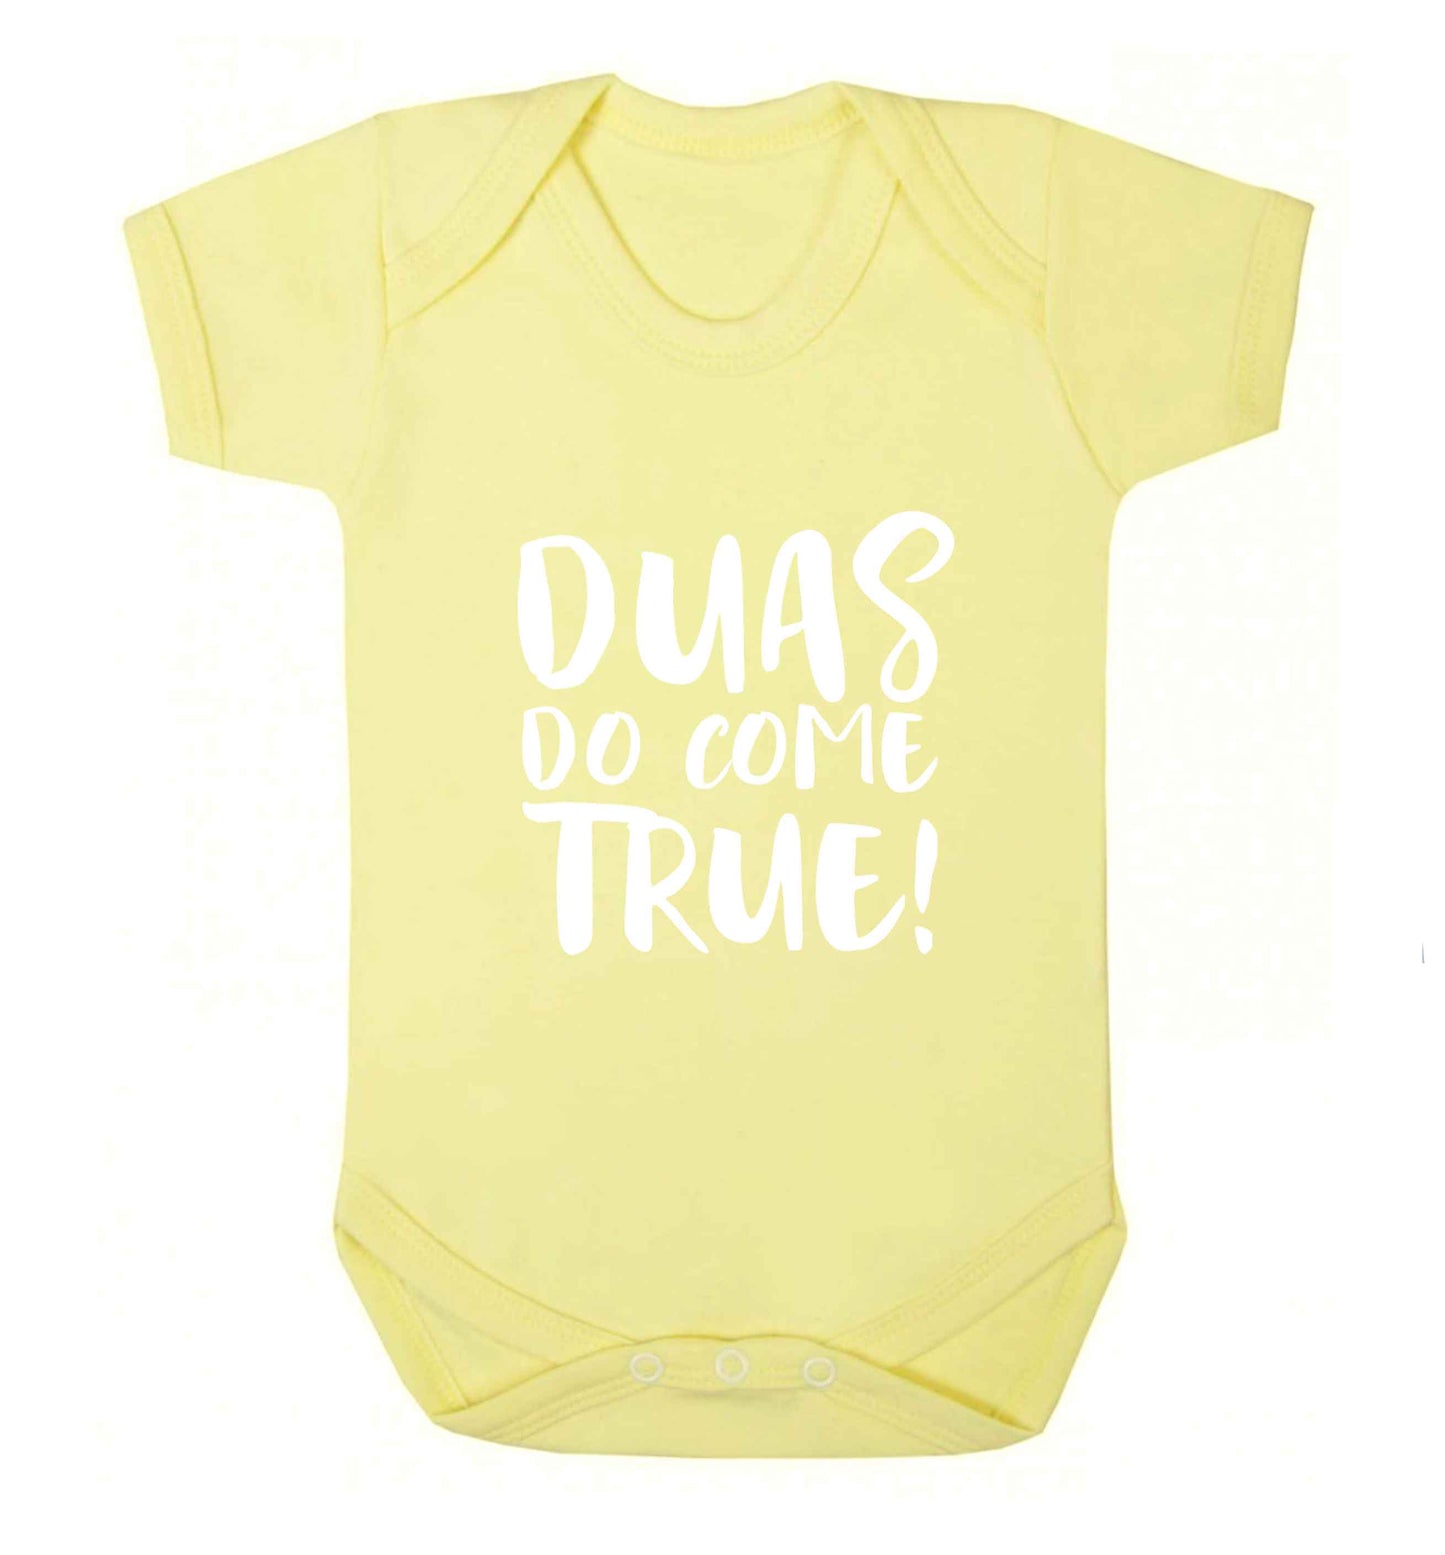 Duas do come true baby vest pale yellow 18-24 months